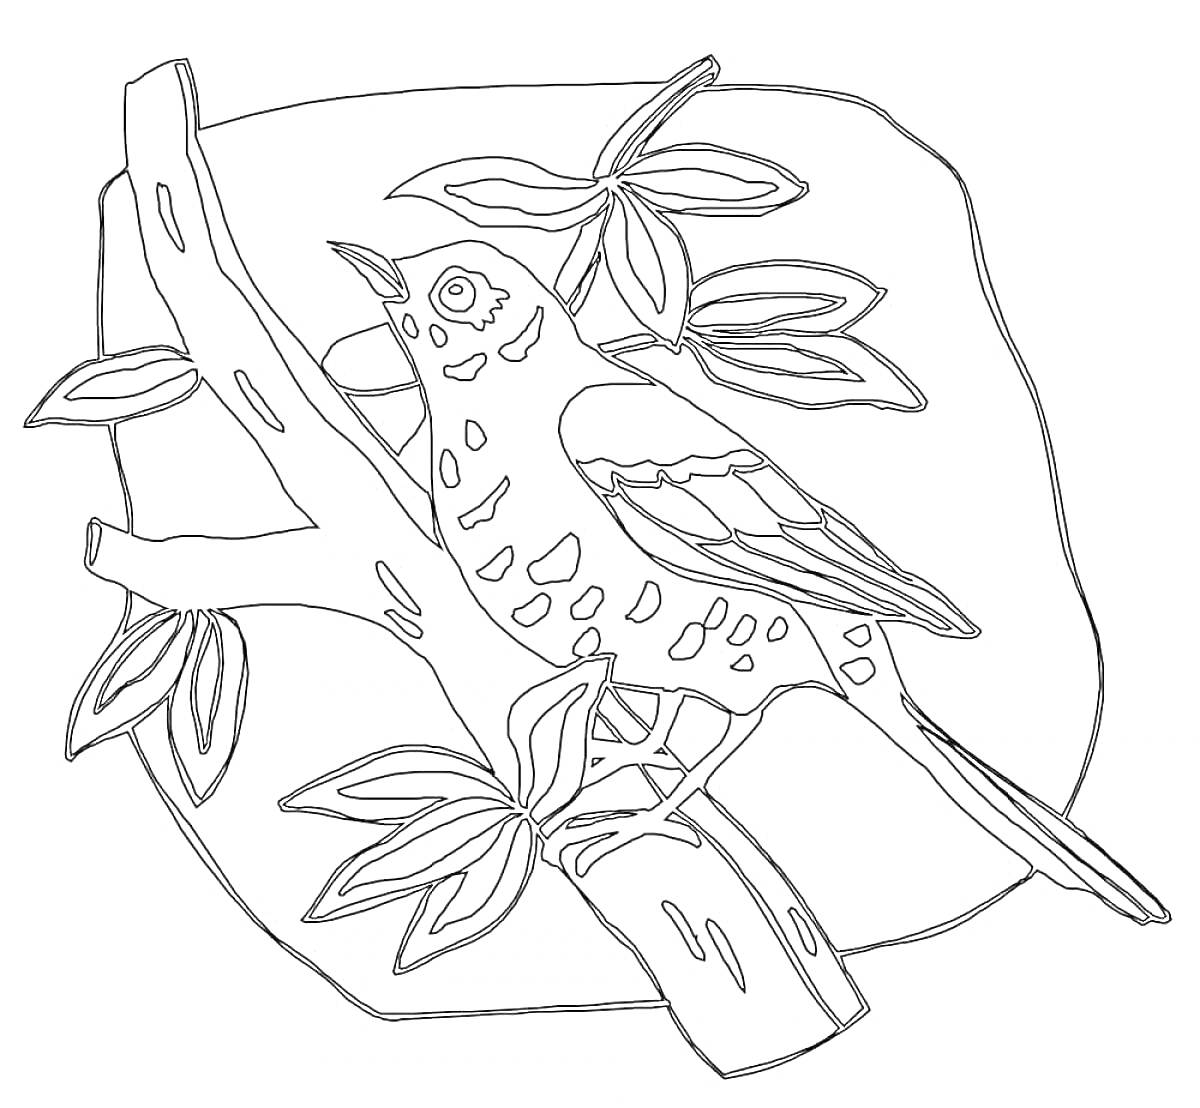 Раскраска Дрозд на ветке с листьями